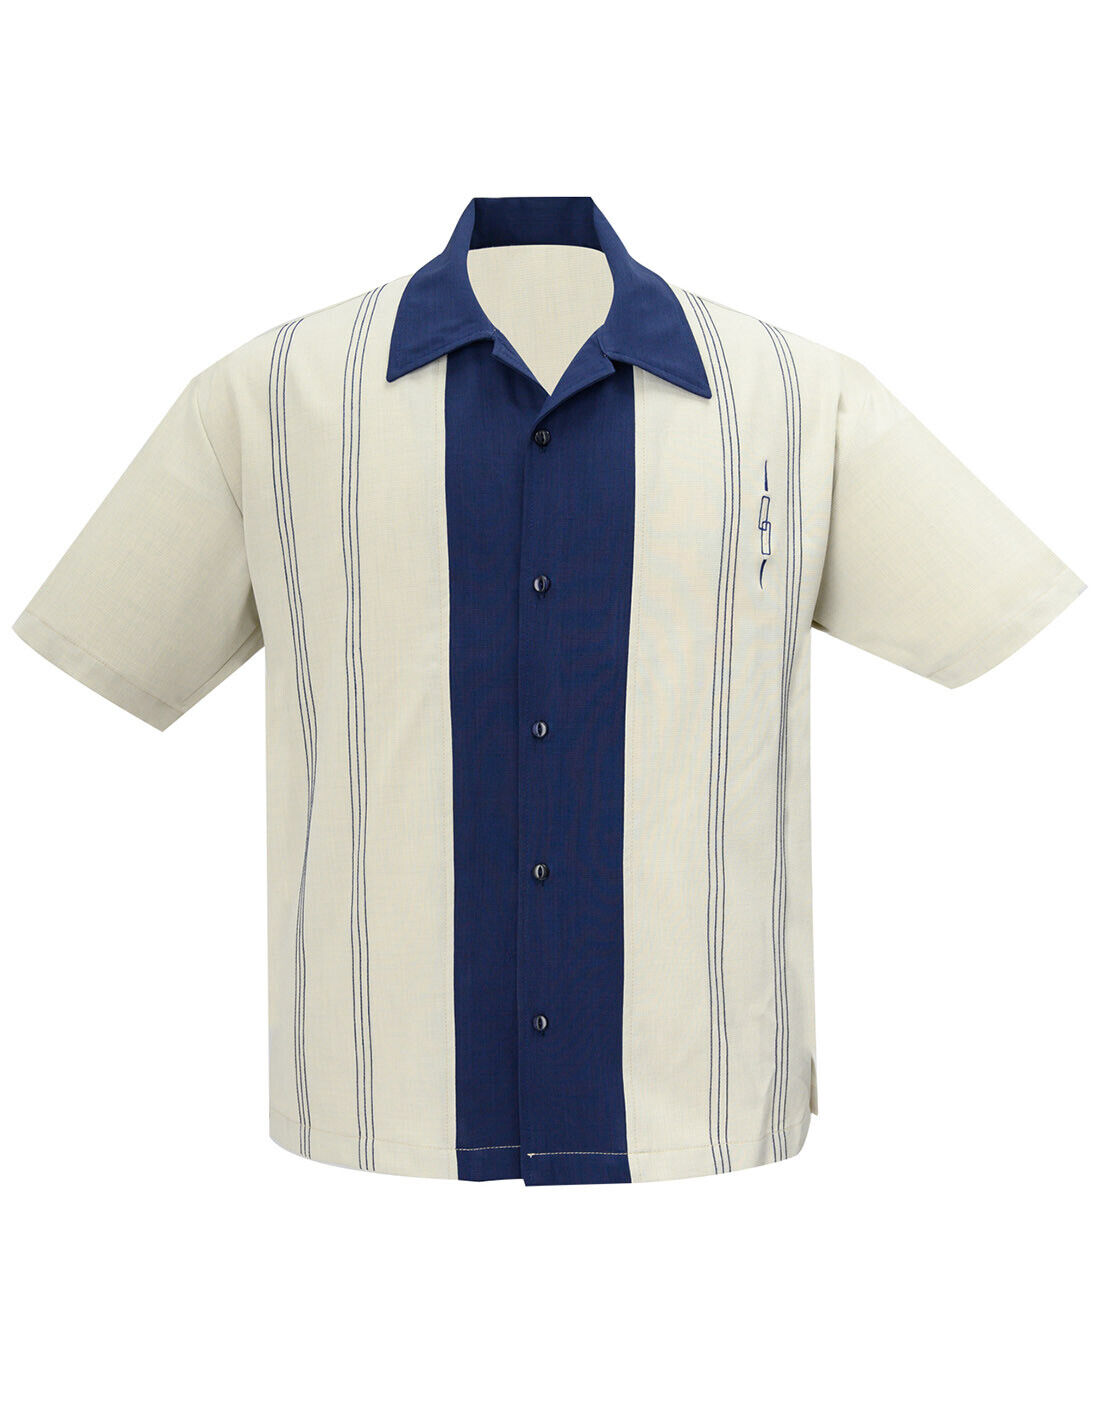 Steady Clothing Hemd The Harper Stone Navy Vintage Bowling Shirt Retro 50s